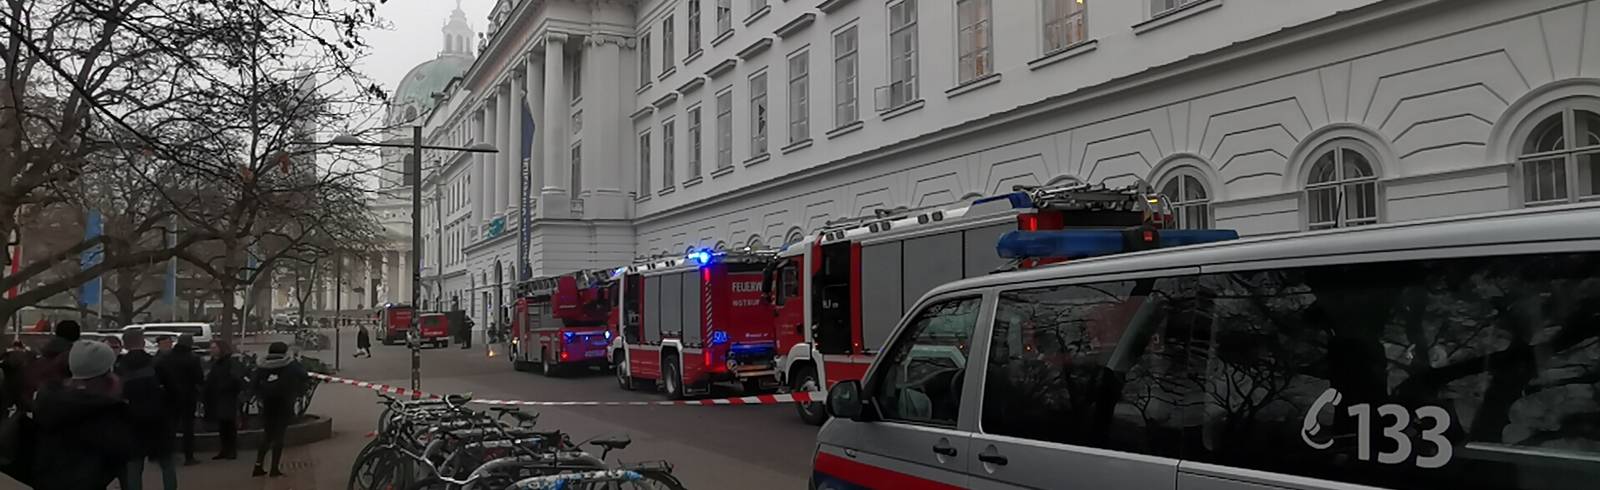 TU Wien nach Bombendrohung geräumt